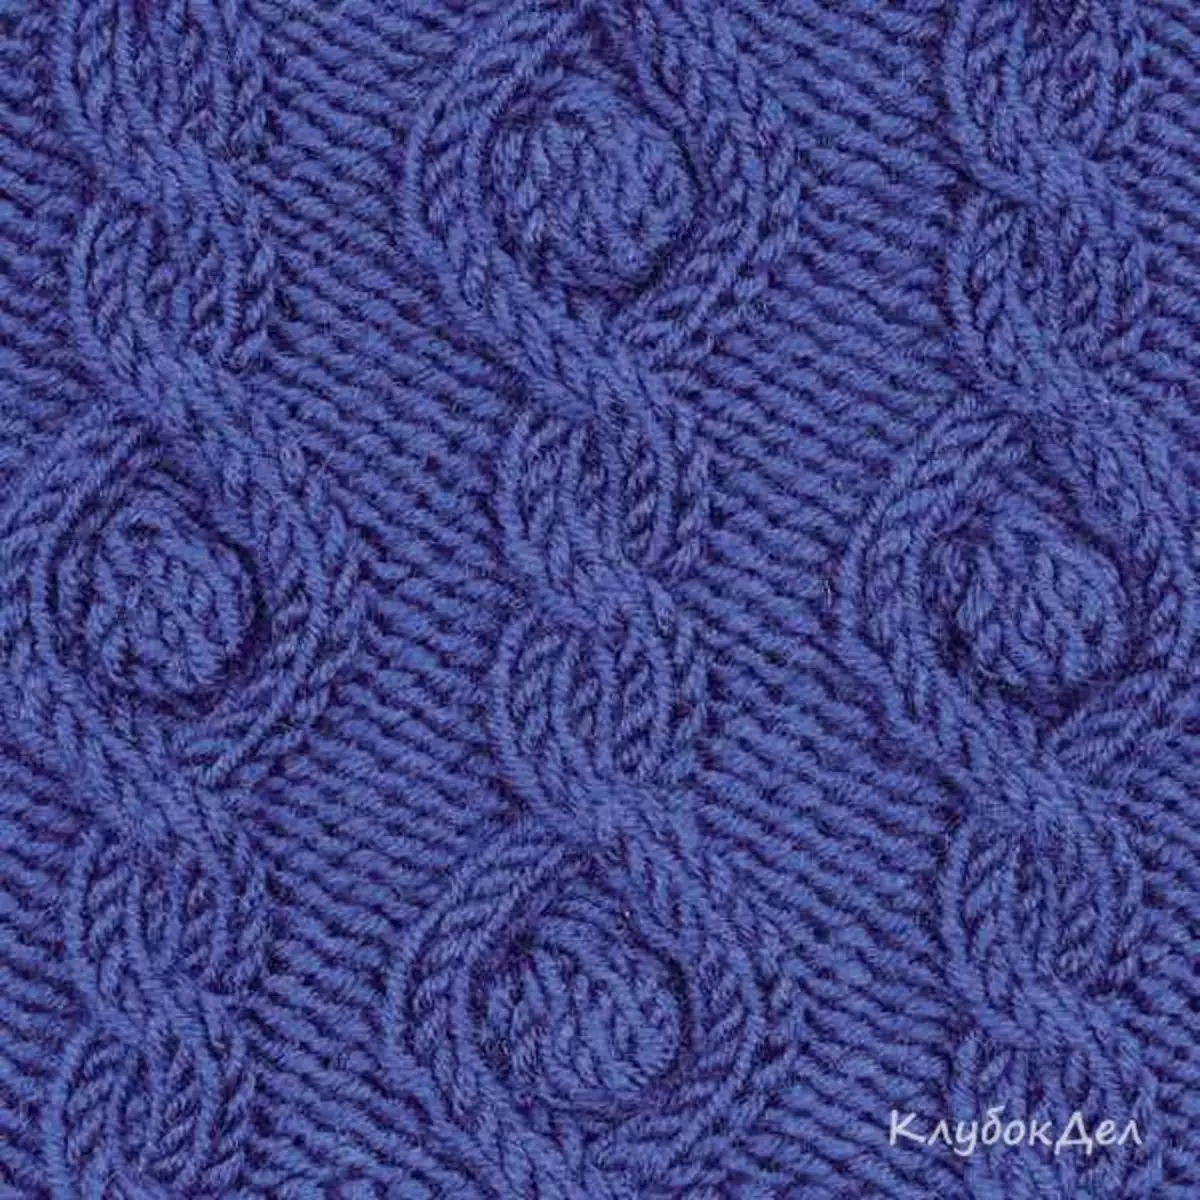 Lub cev knitting knitting: schemes nrog video